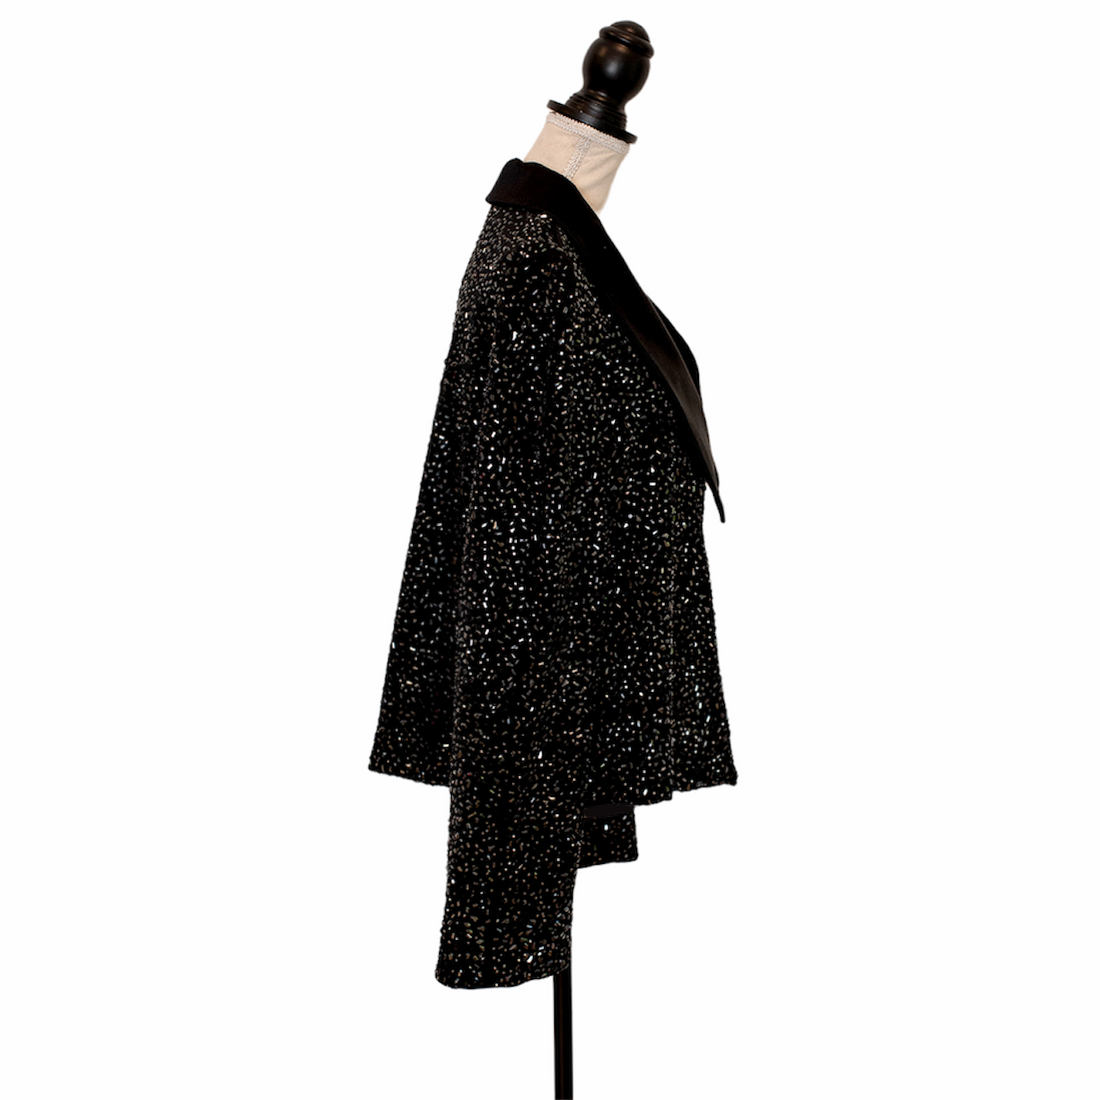 Giorgio Armani Lavishly embroidered evening jacket with collar